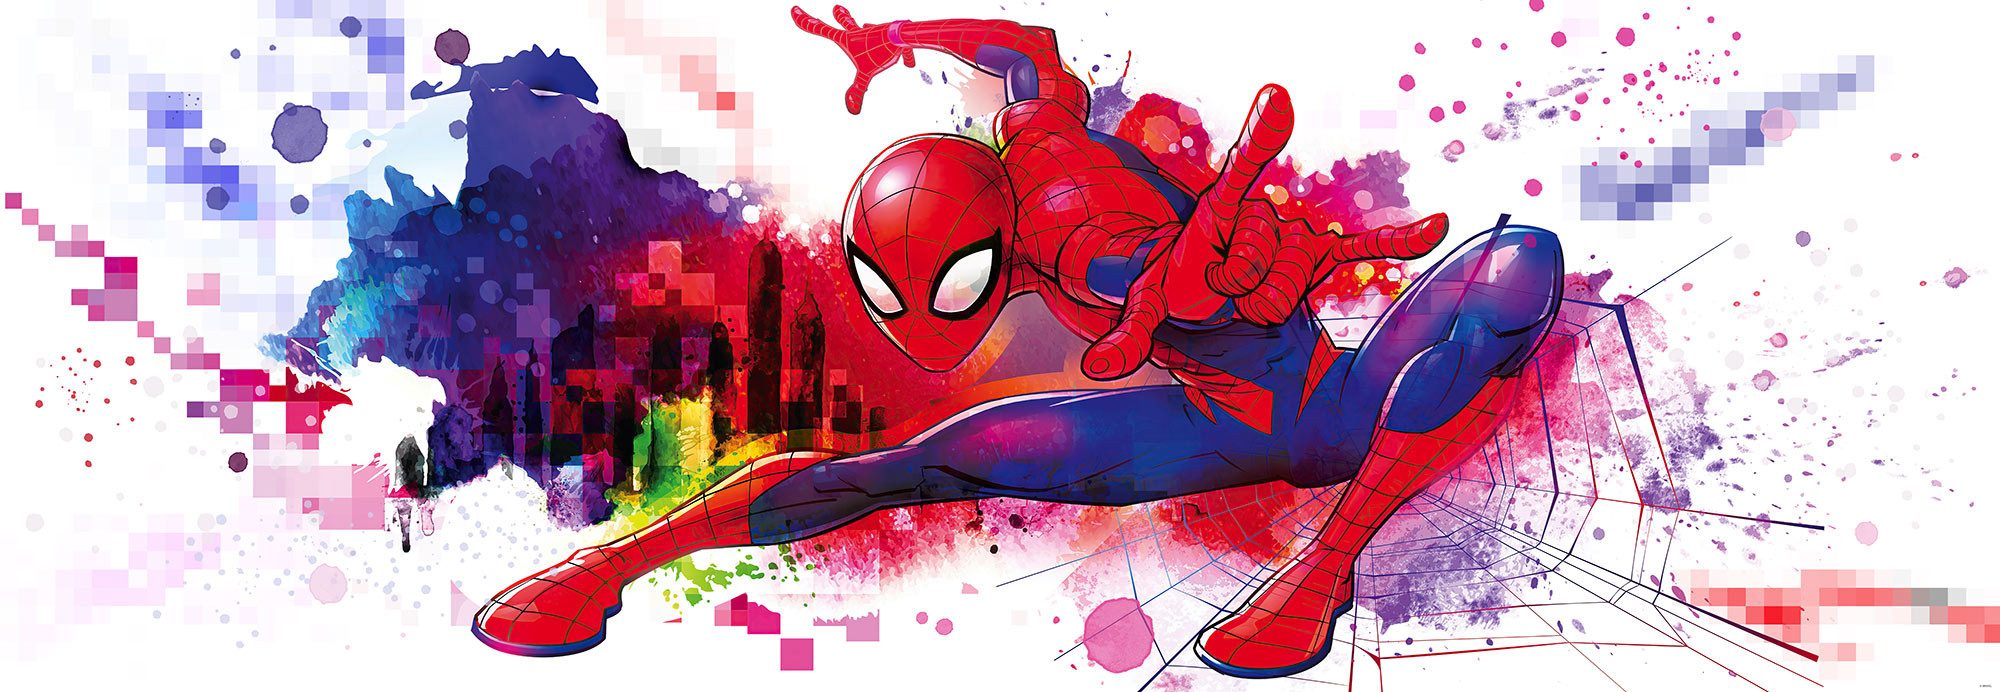 Spider-Man Graffiti 